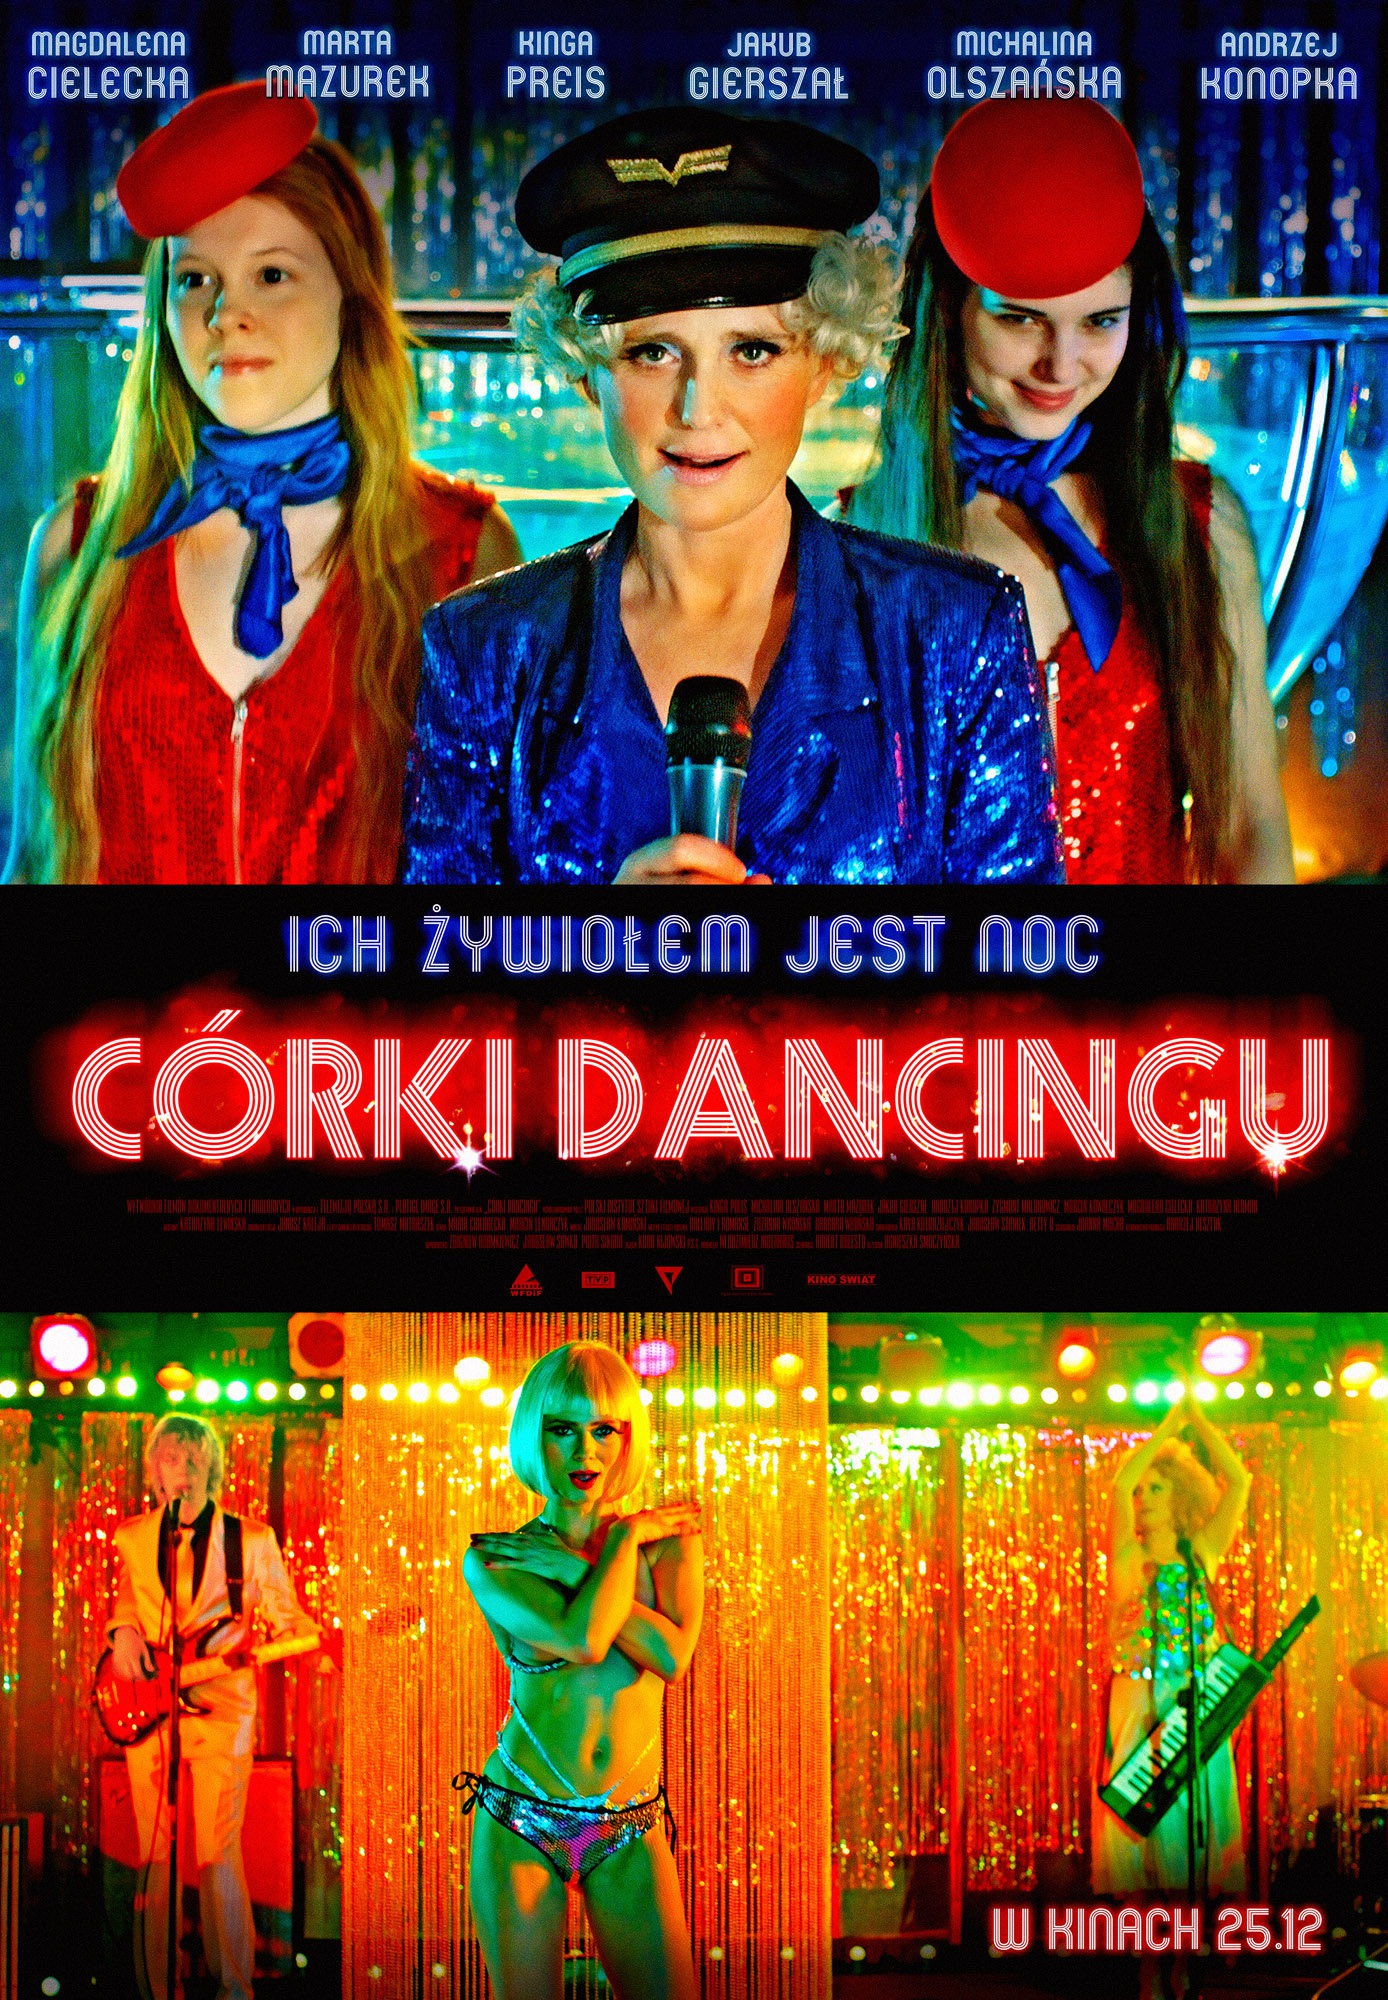 Mega Sized Movie Poster Image for Córki dancingu (#1 of 2)